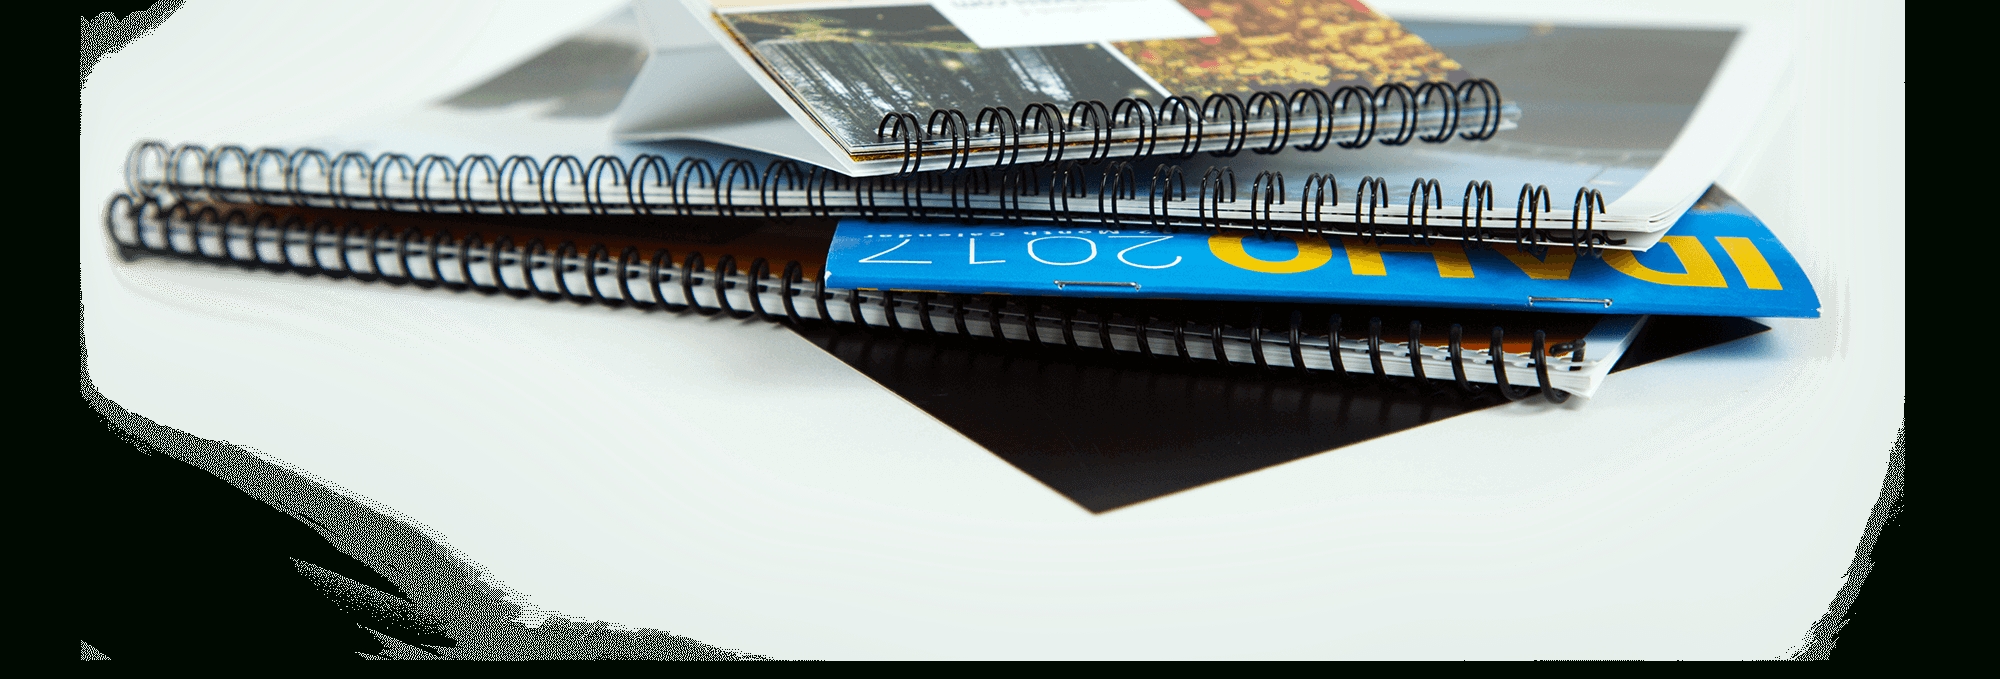 Custom Calendar Printing | Personalized Calendars | Smartpress Calendar Printing Companies Near Me